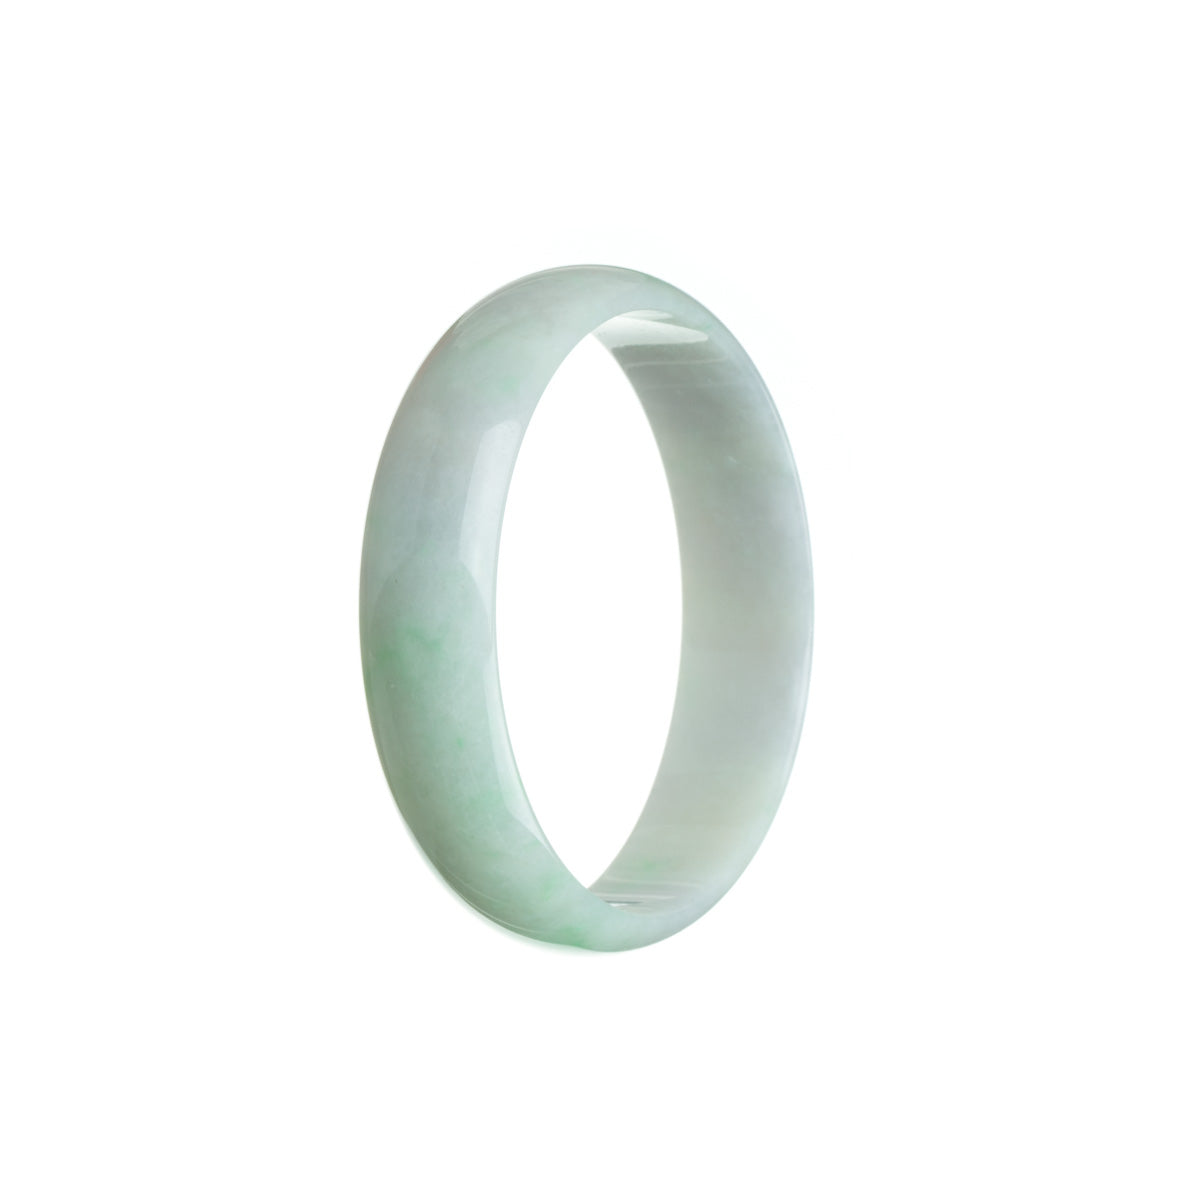 Authentic Grade A Green Lavender White Burmese Jade Bangle Bracelet - 52mm Flat